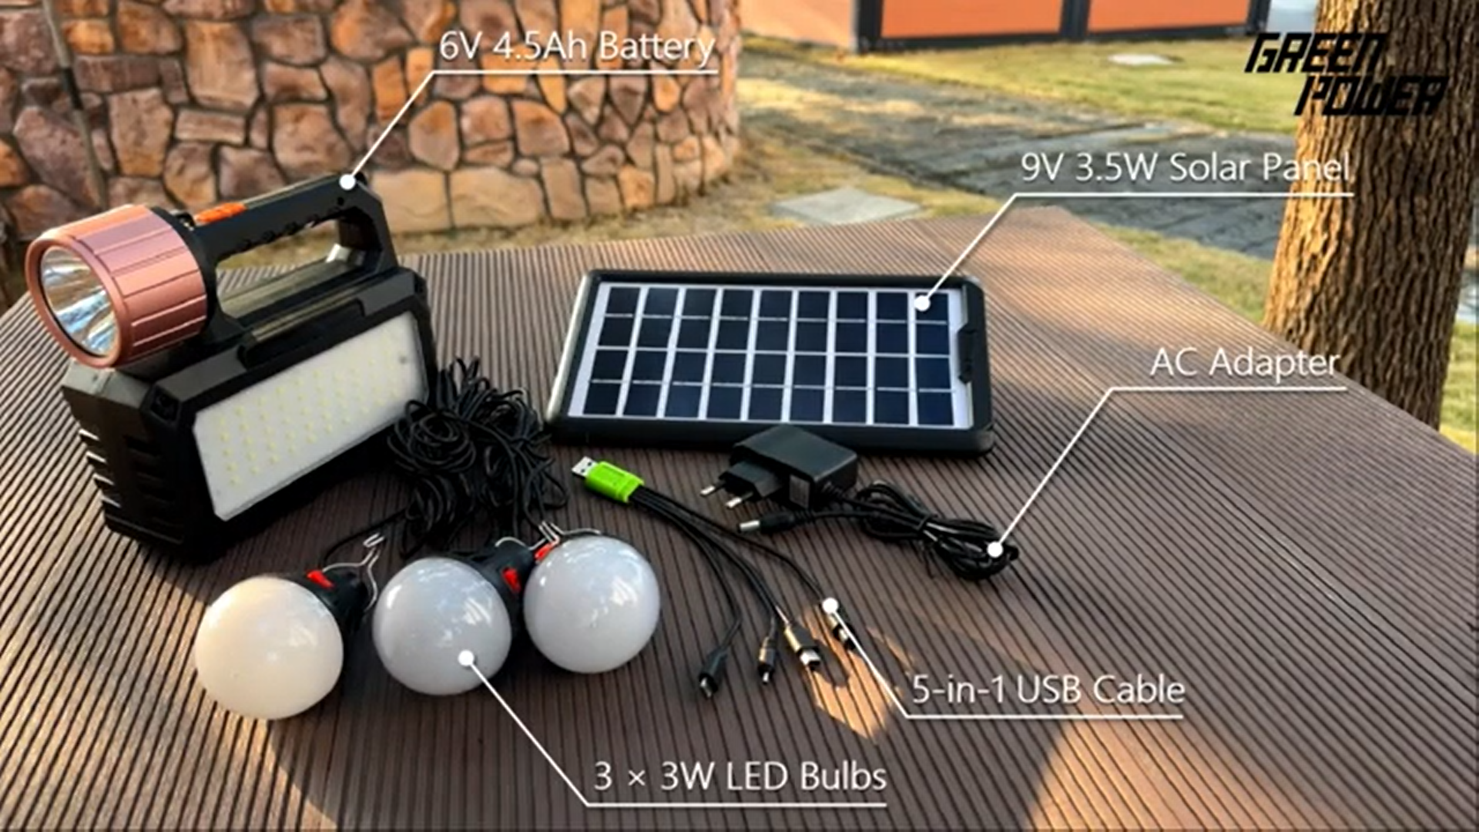 GP 0118B Newest Handheld Solar Lighting Kits – SOS Safety Beacons & More!